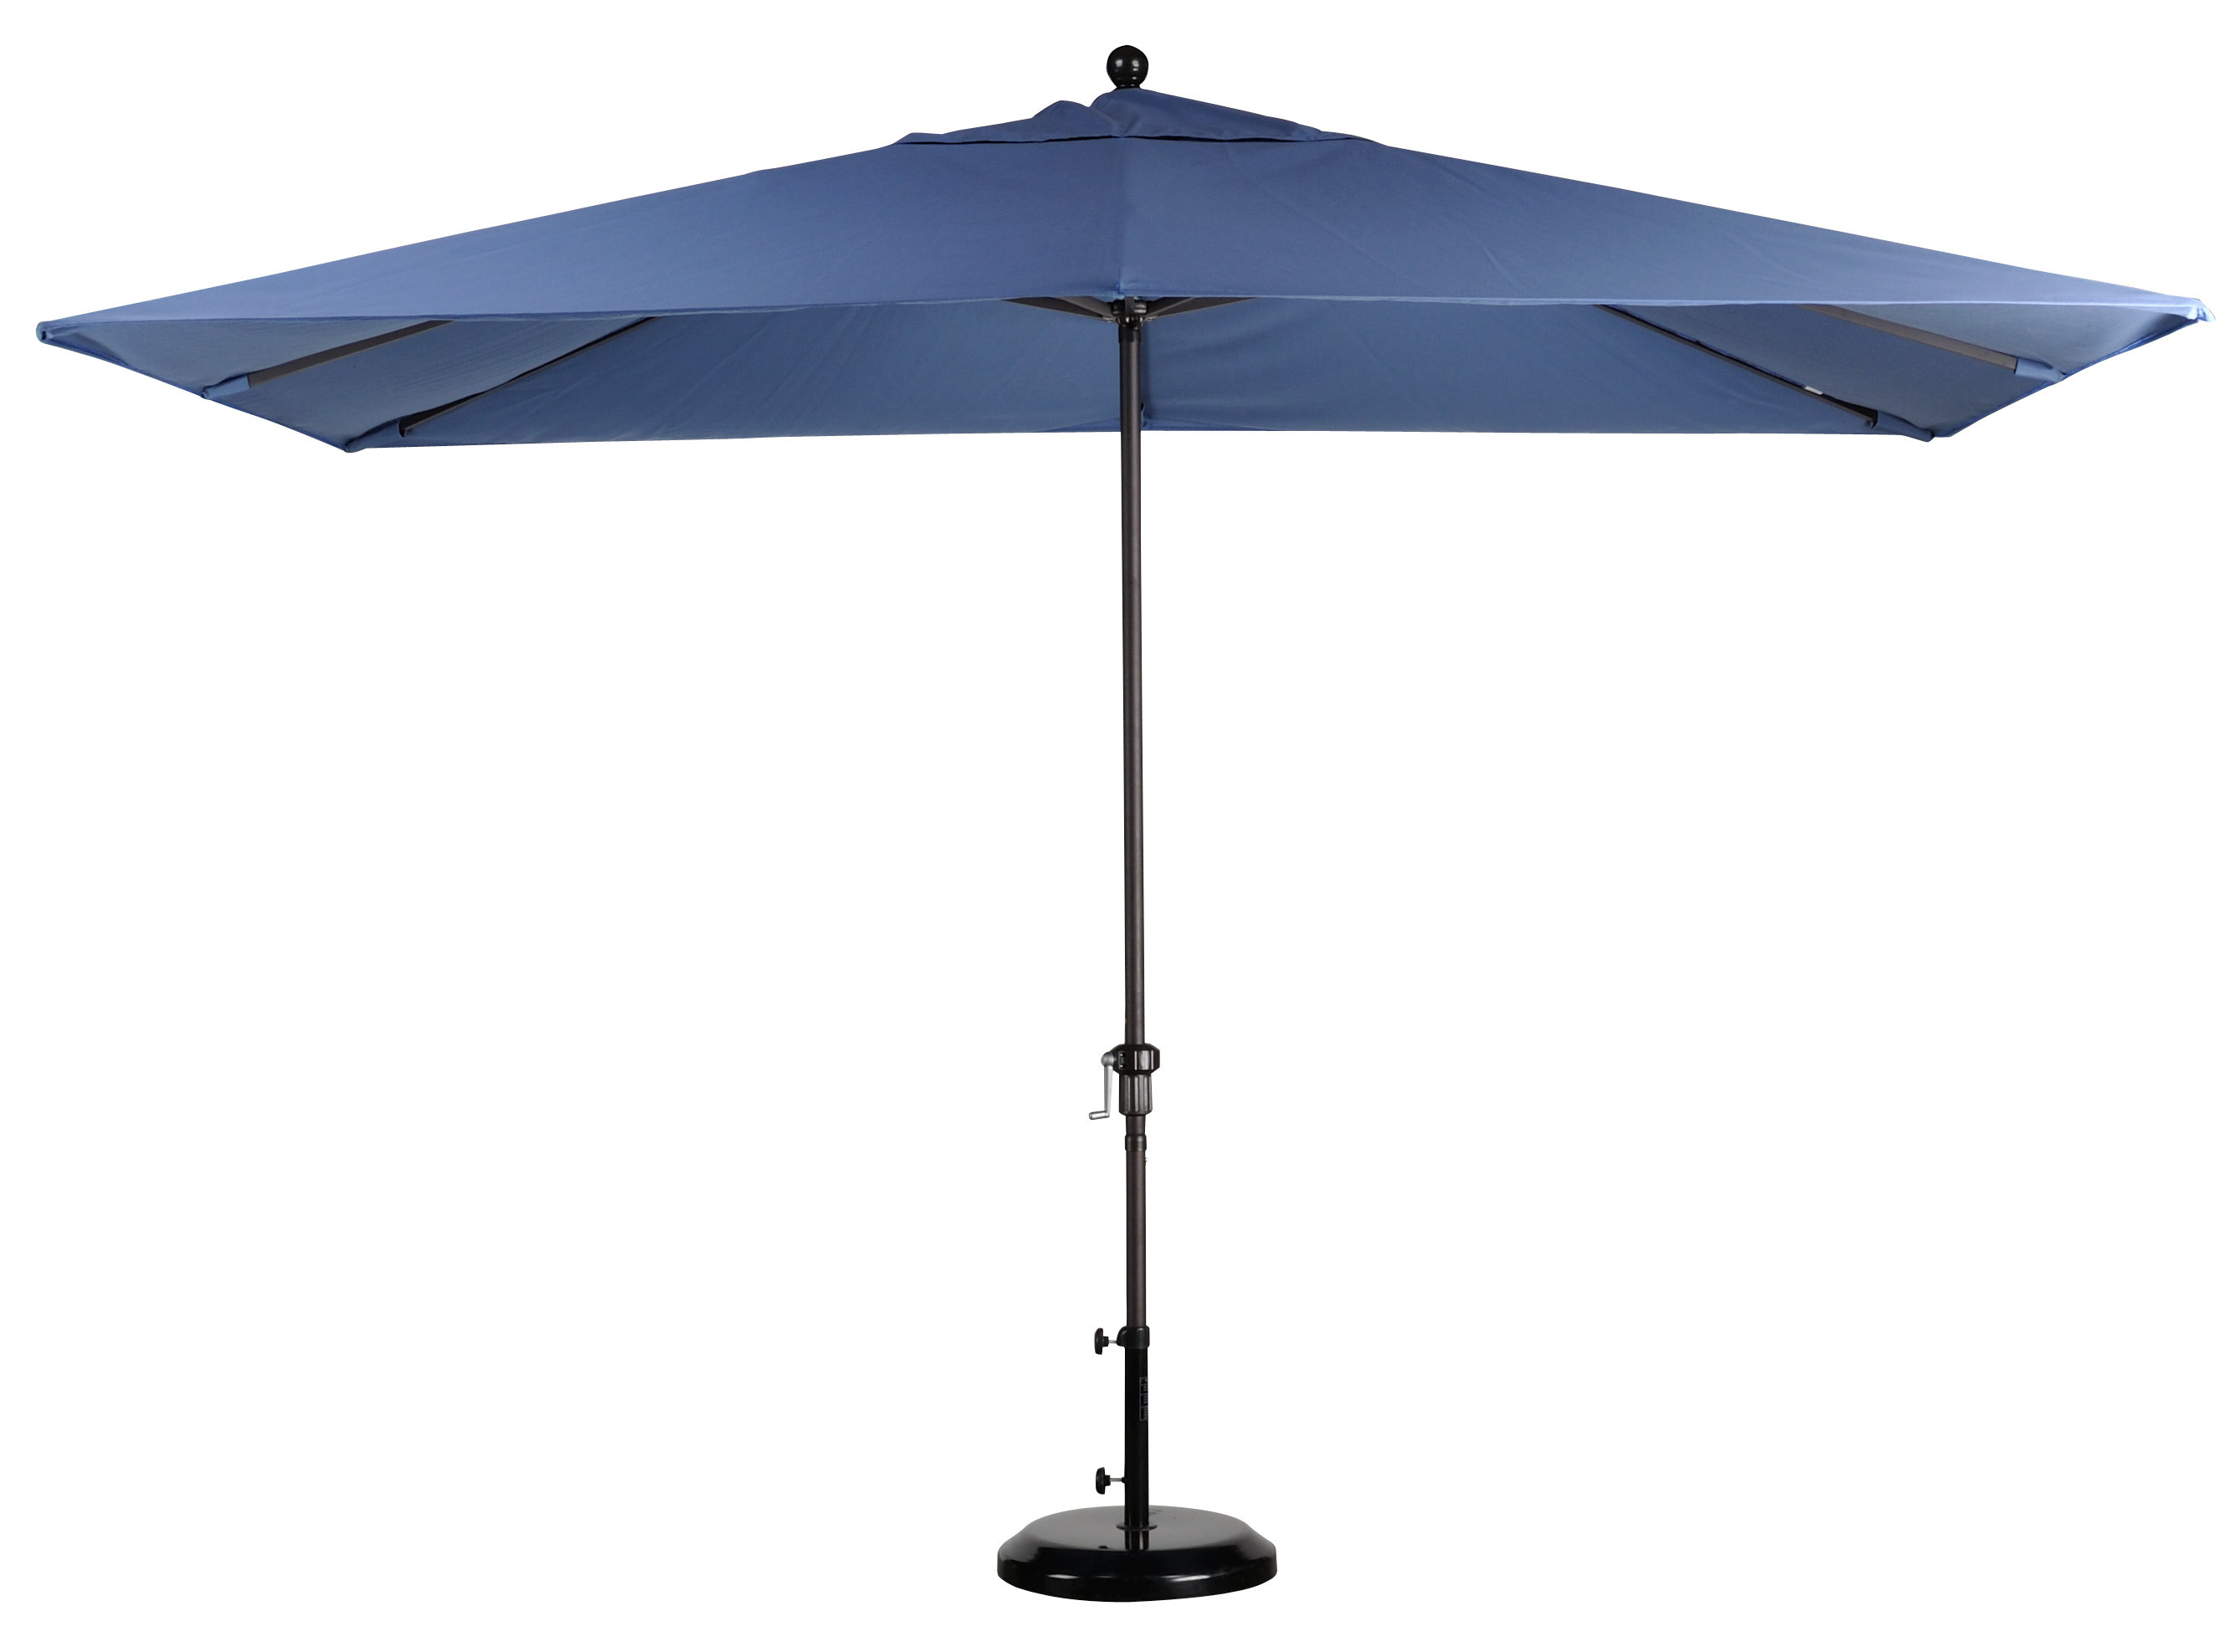 Best ideas about Sunbrella Patio Umbrellas
. Save or Pin Sunbrella Umbrellas Now.